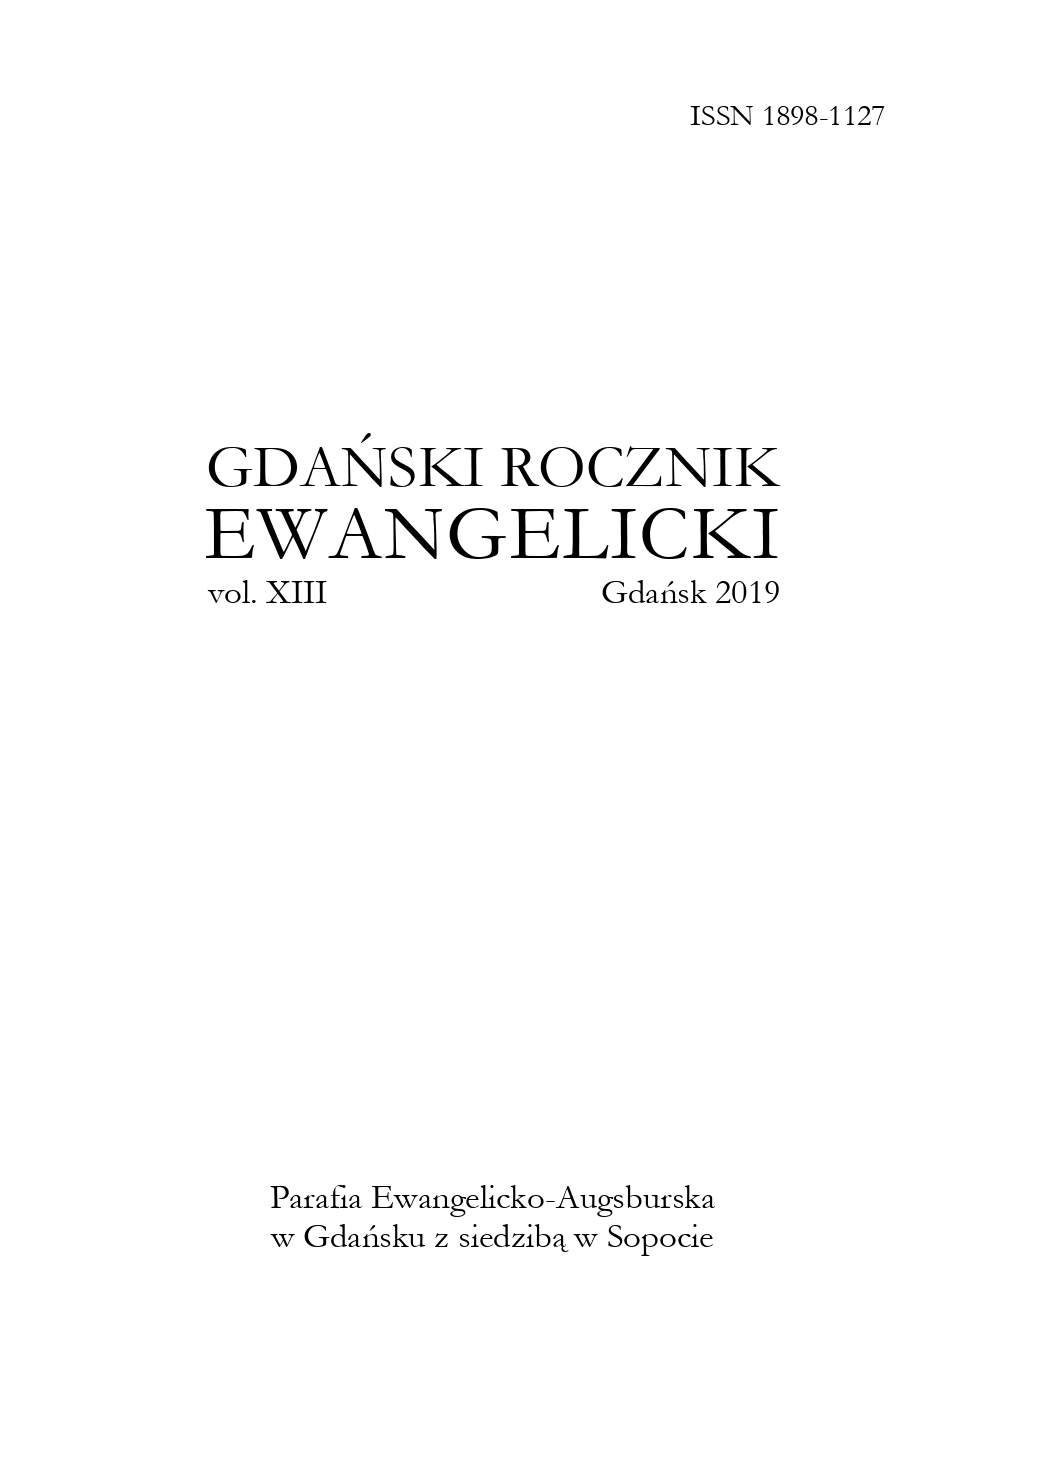 An Analysis of Selected Upbuilding Discourses in the Works of Søren Kierkegaard in the Context of Evangelical Homiletics